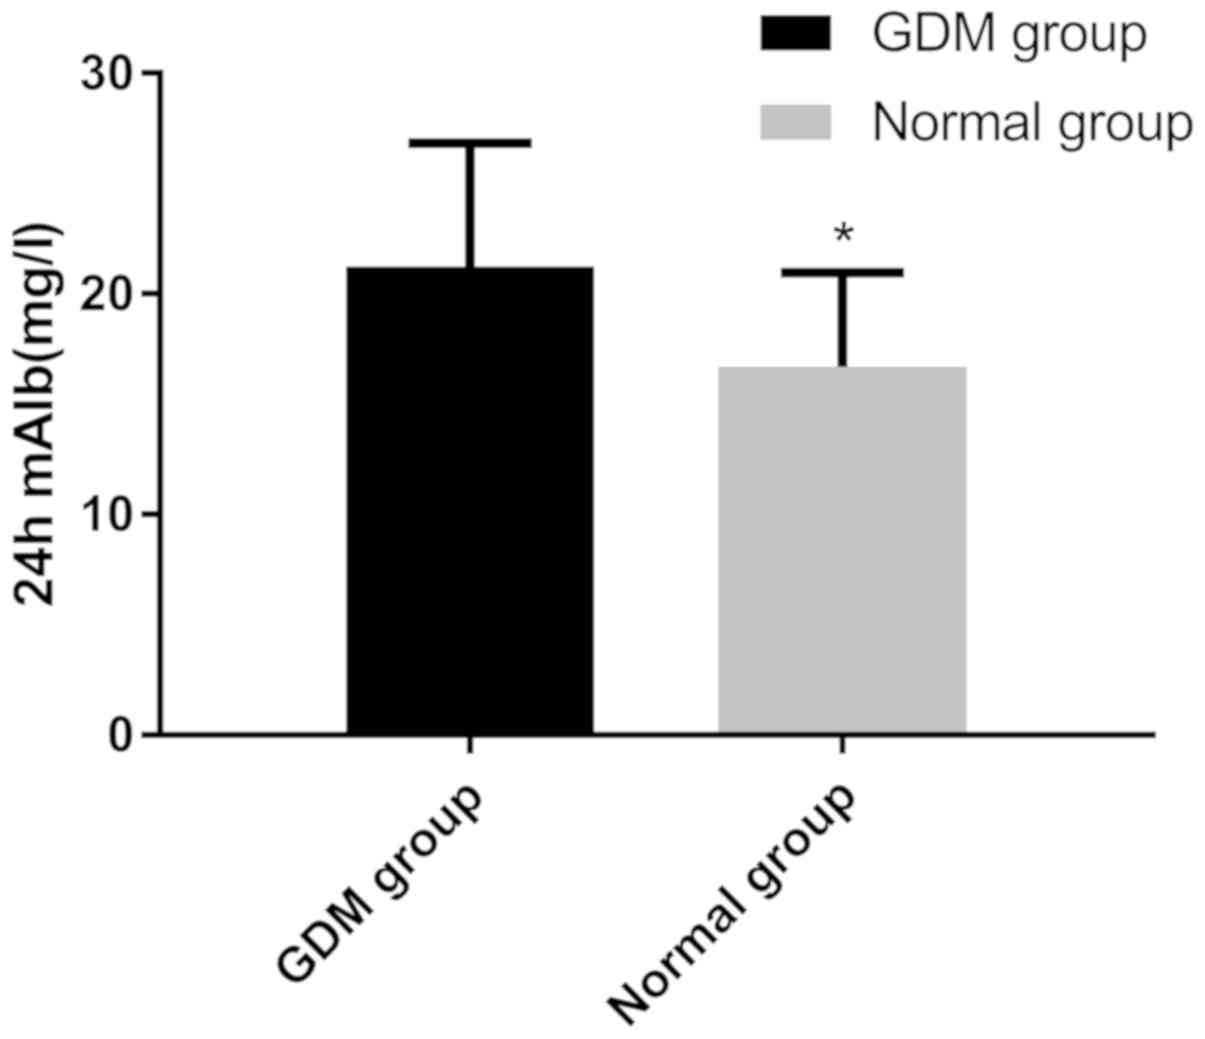 Increased Levels Of Glycosylated Hemoglobin Microalbuminuria And